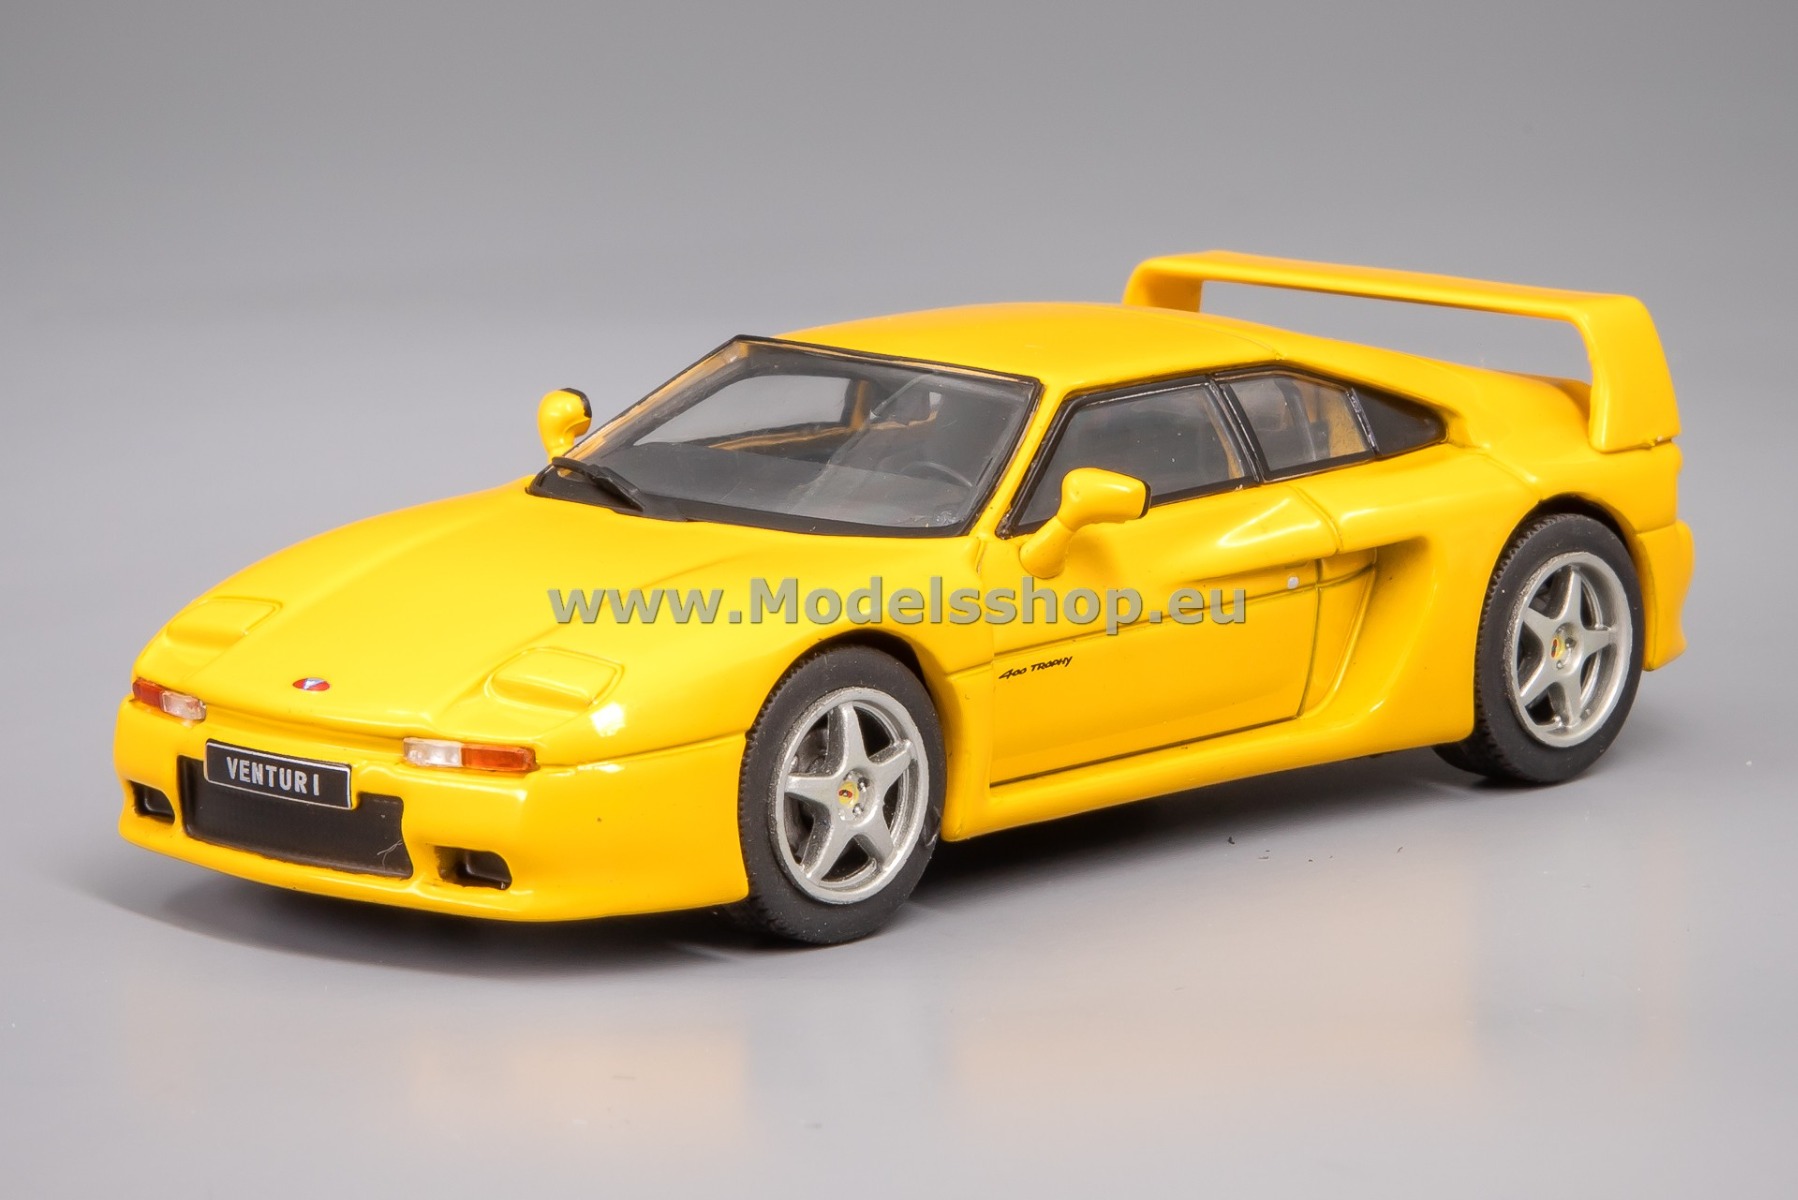 Solido S4313402 Venturi 400 GT, 1994 /yellow/